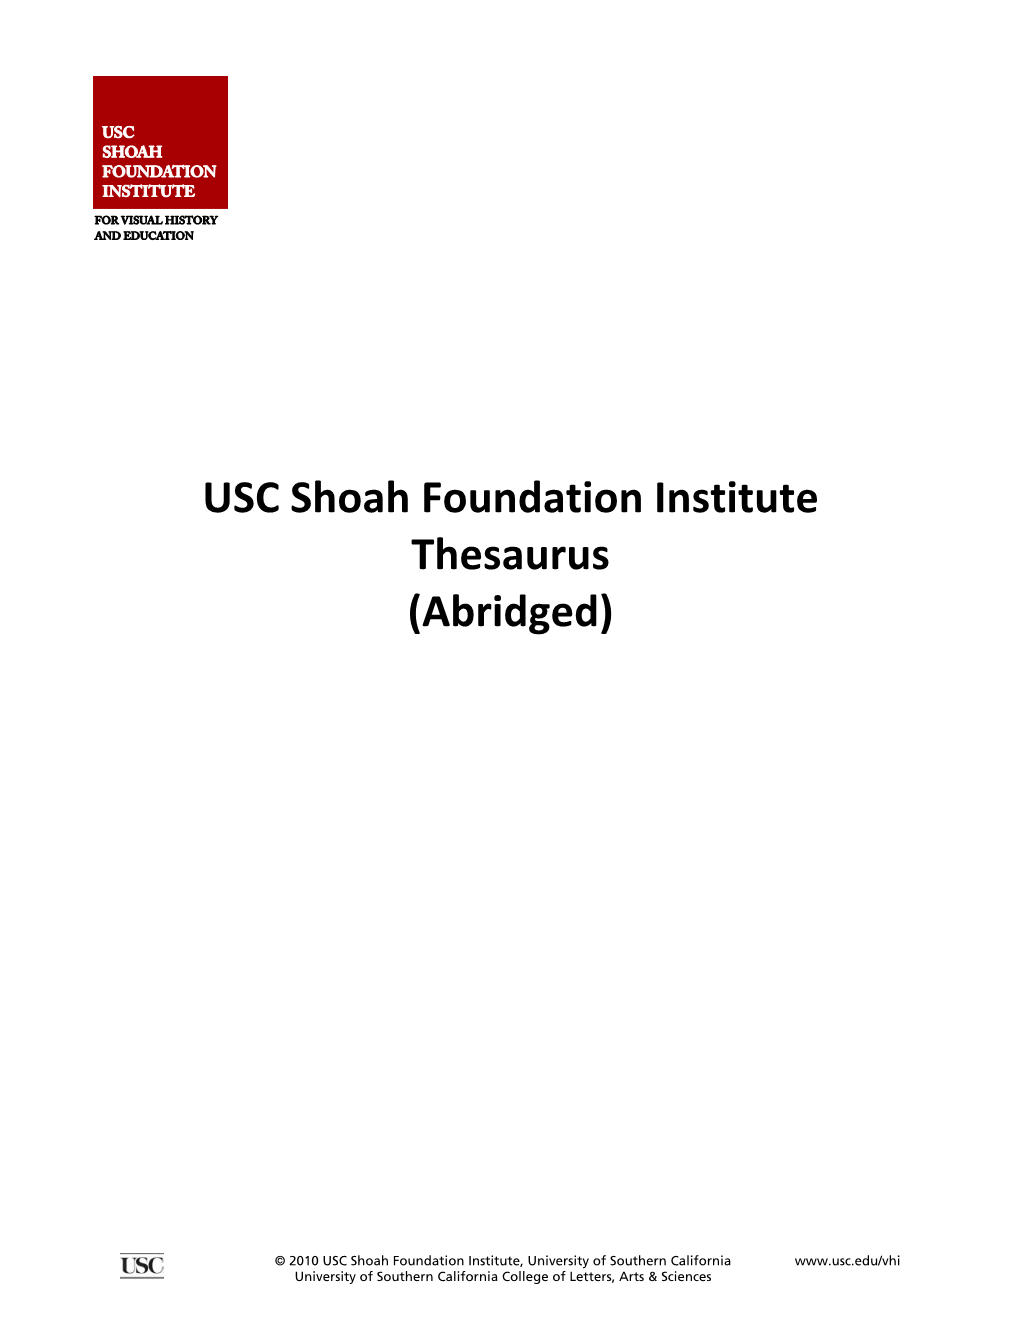 USC Shoah Foundation Institute Thesaurus (Abridged)